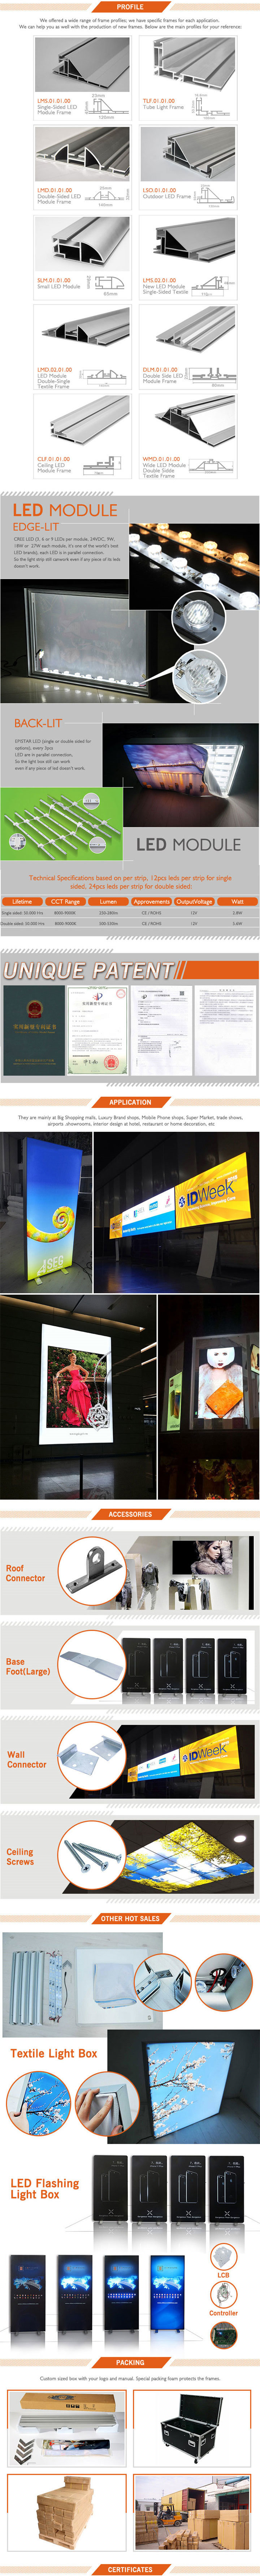 China Clothing Store Wall Decoration Advertising Slim LED Light Box